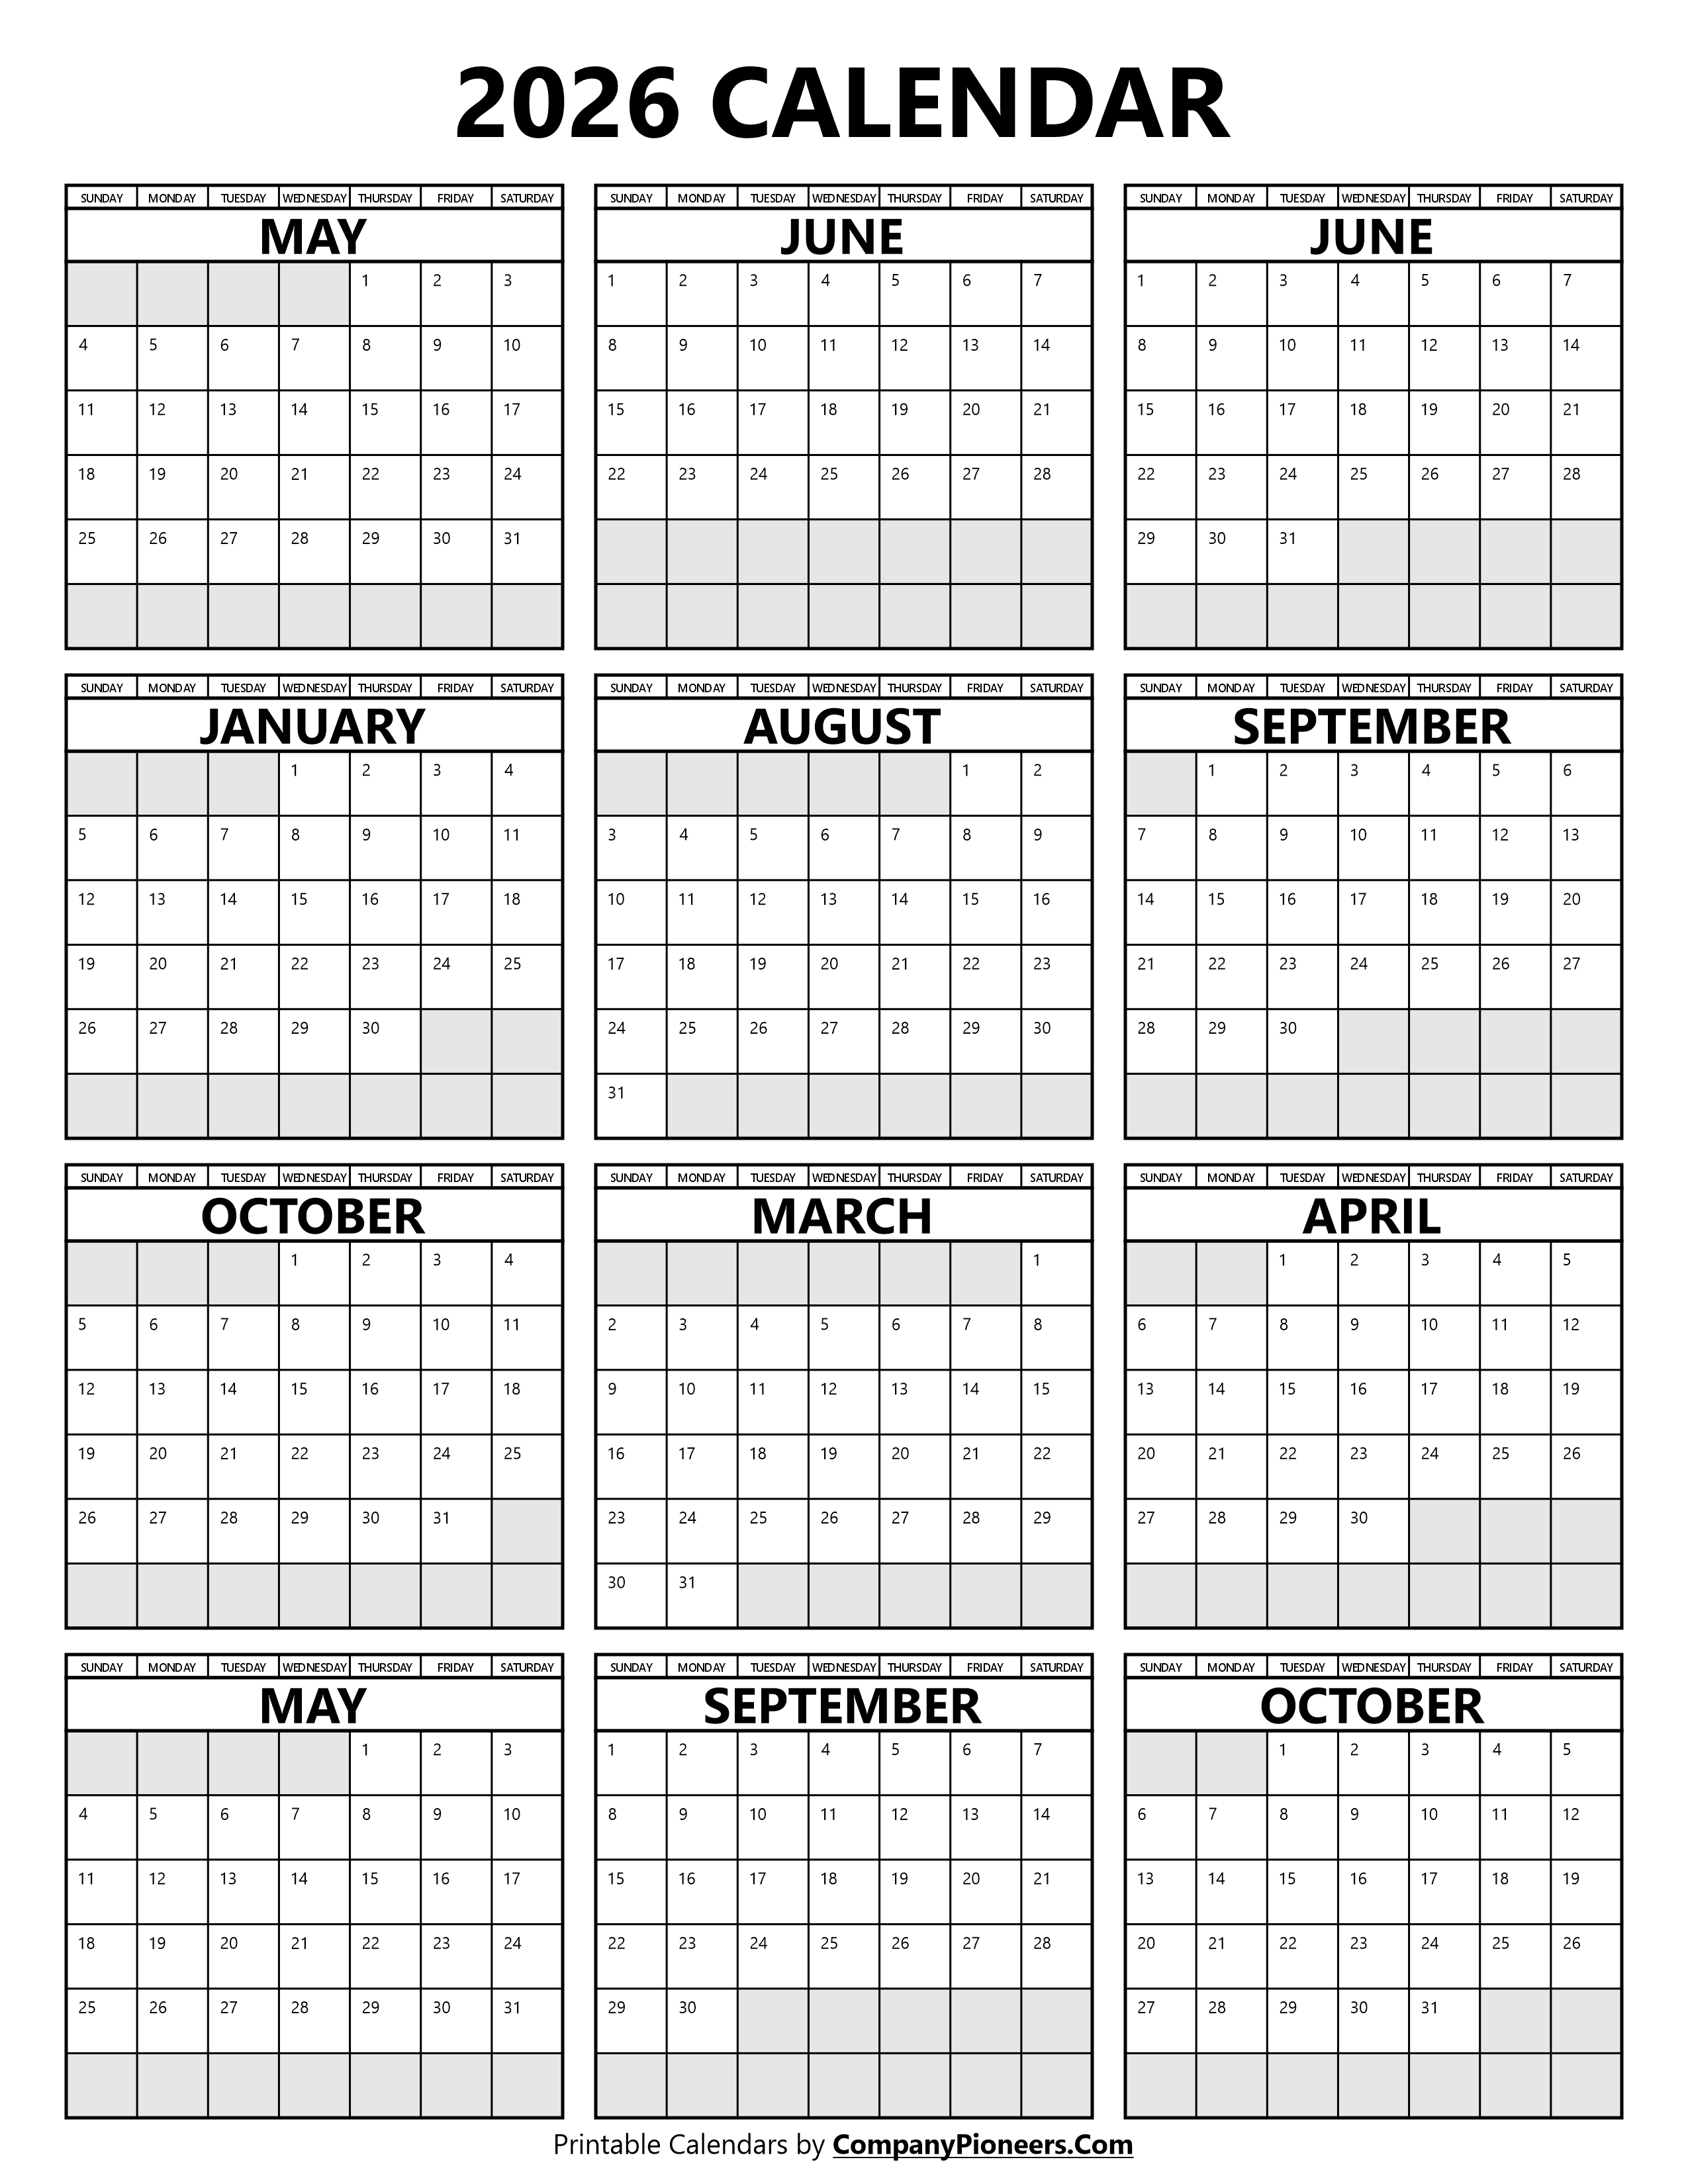 2026 Calendar Segoe UI Font